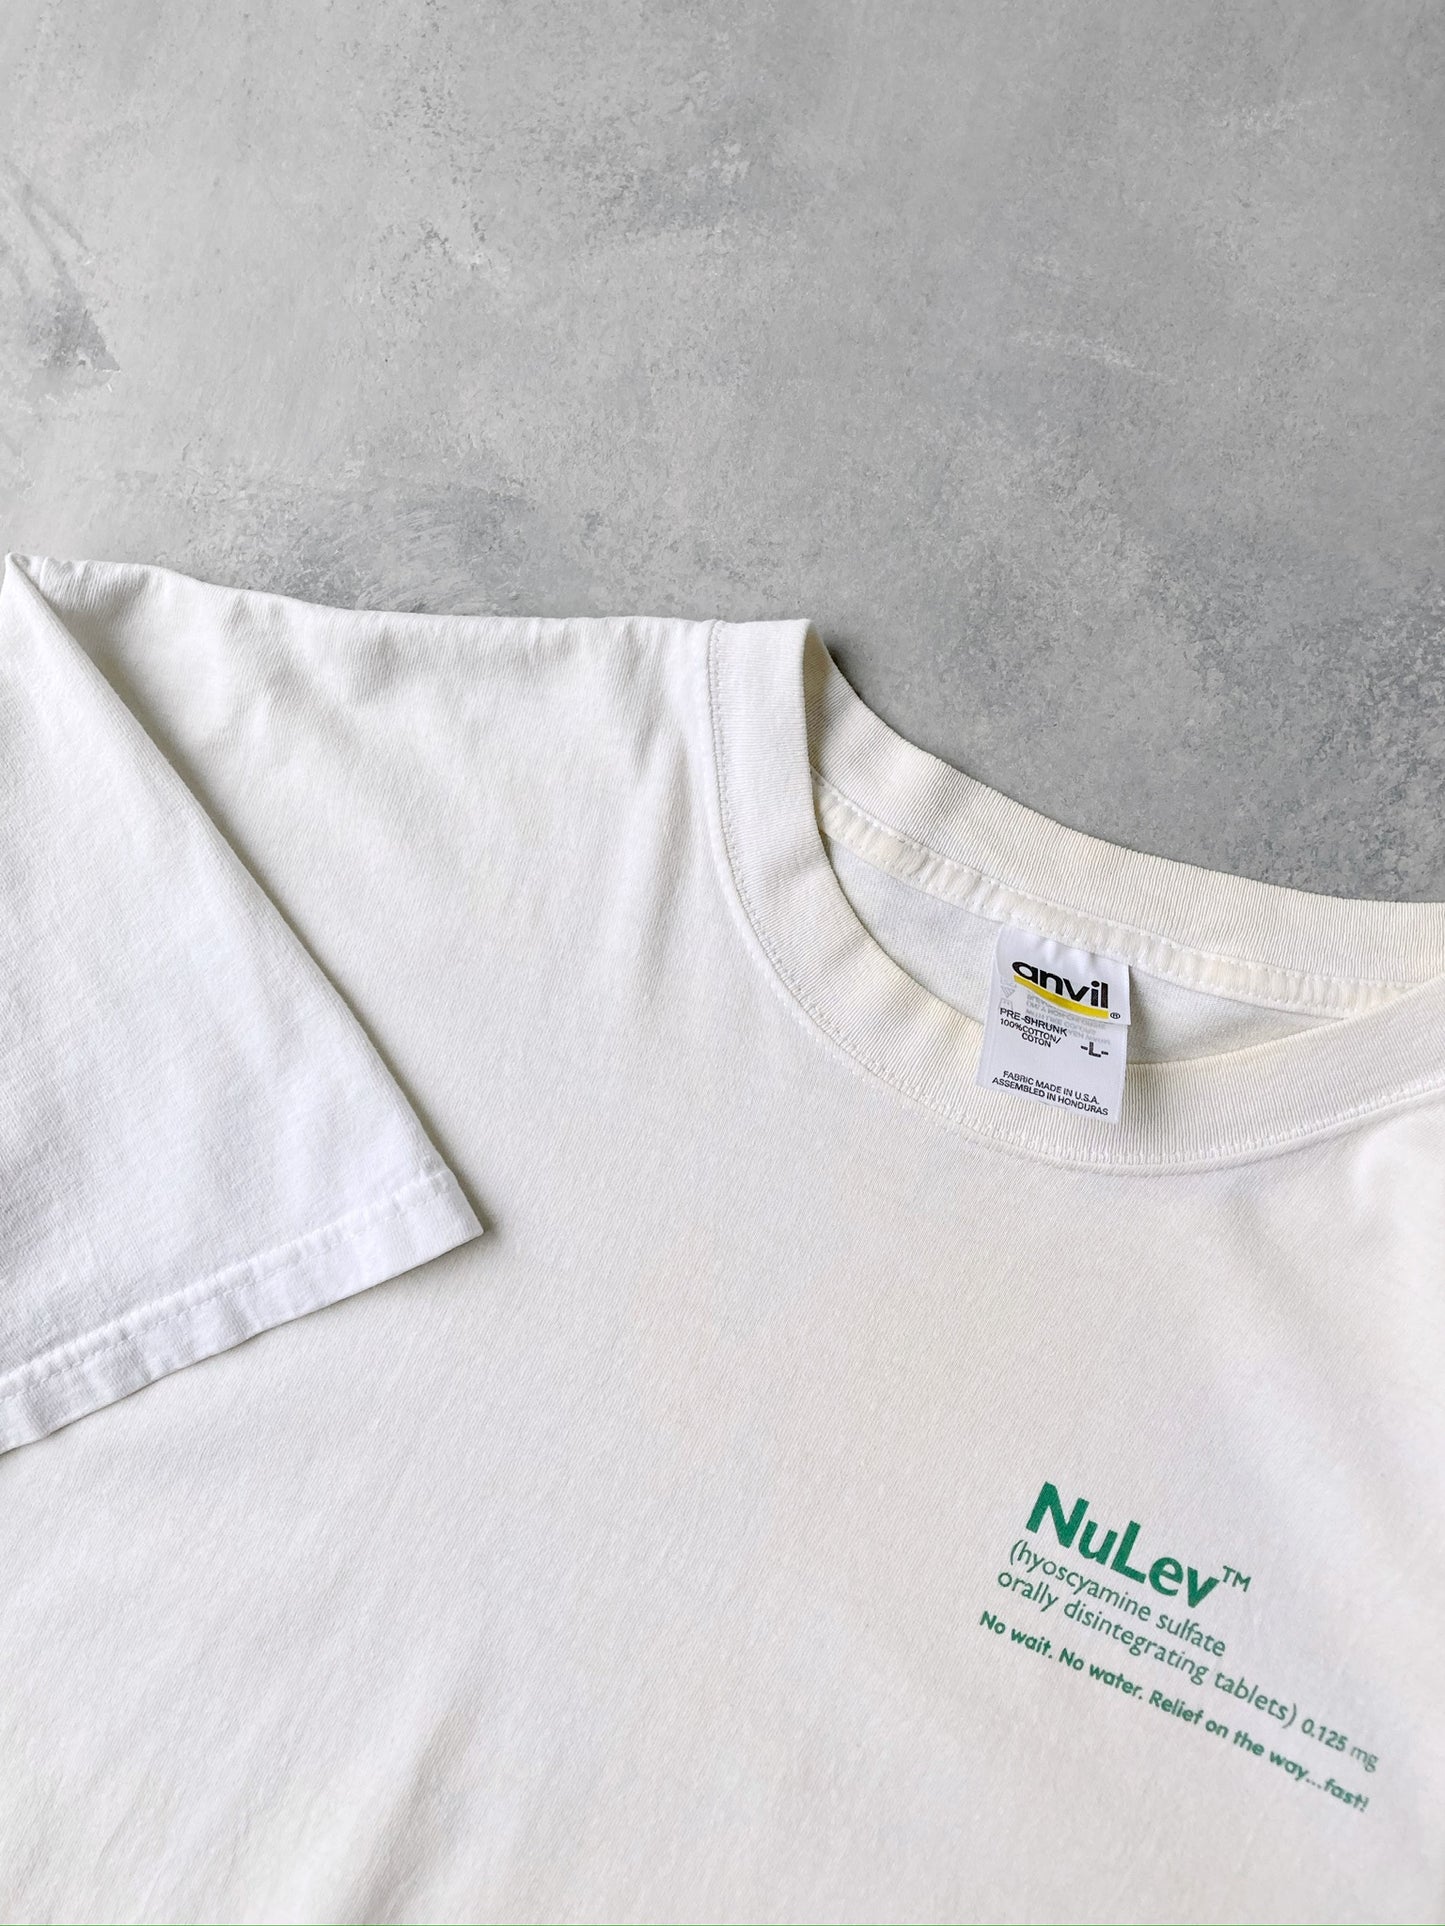 NuLev Medication T-Shirt 00's - Large/ XL